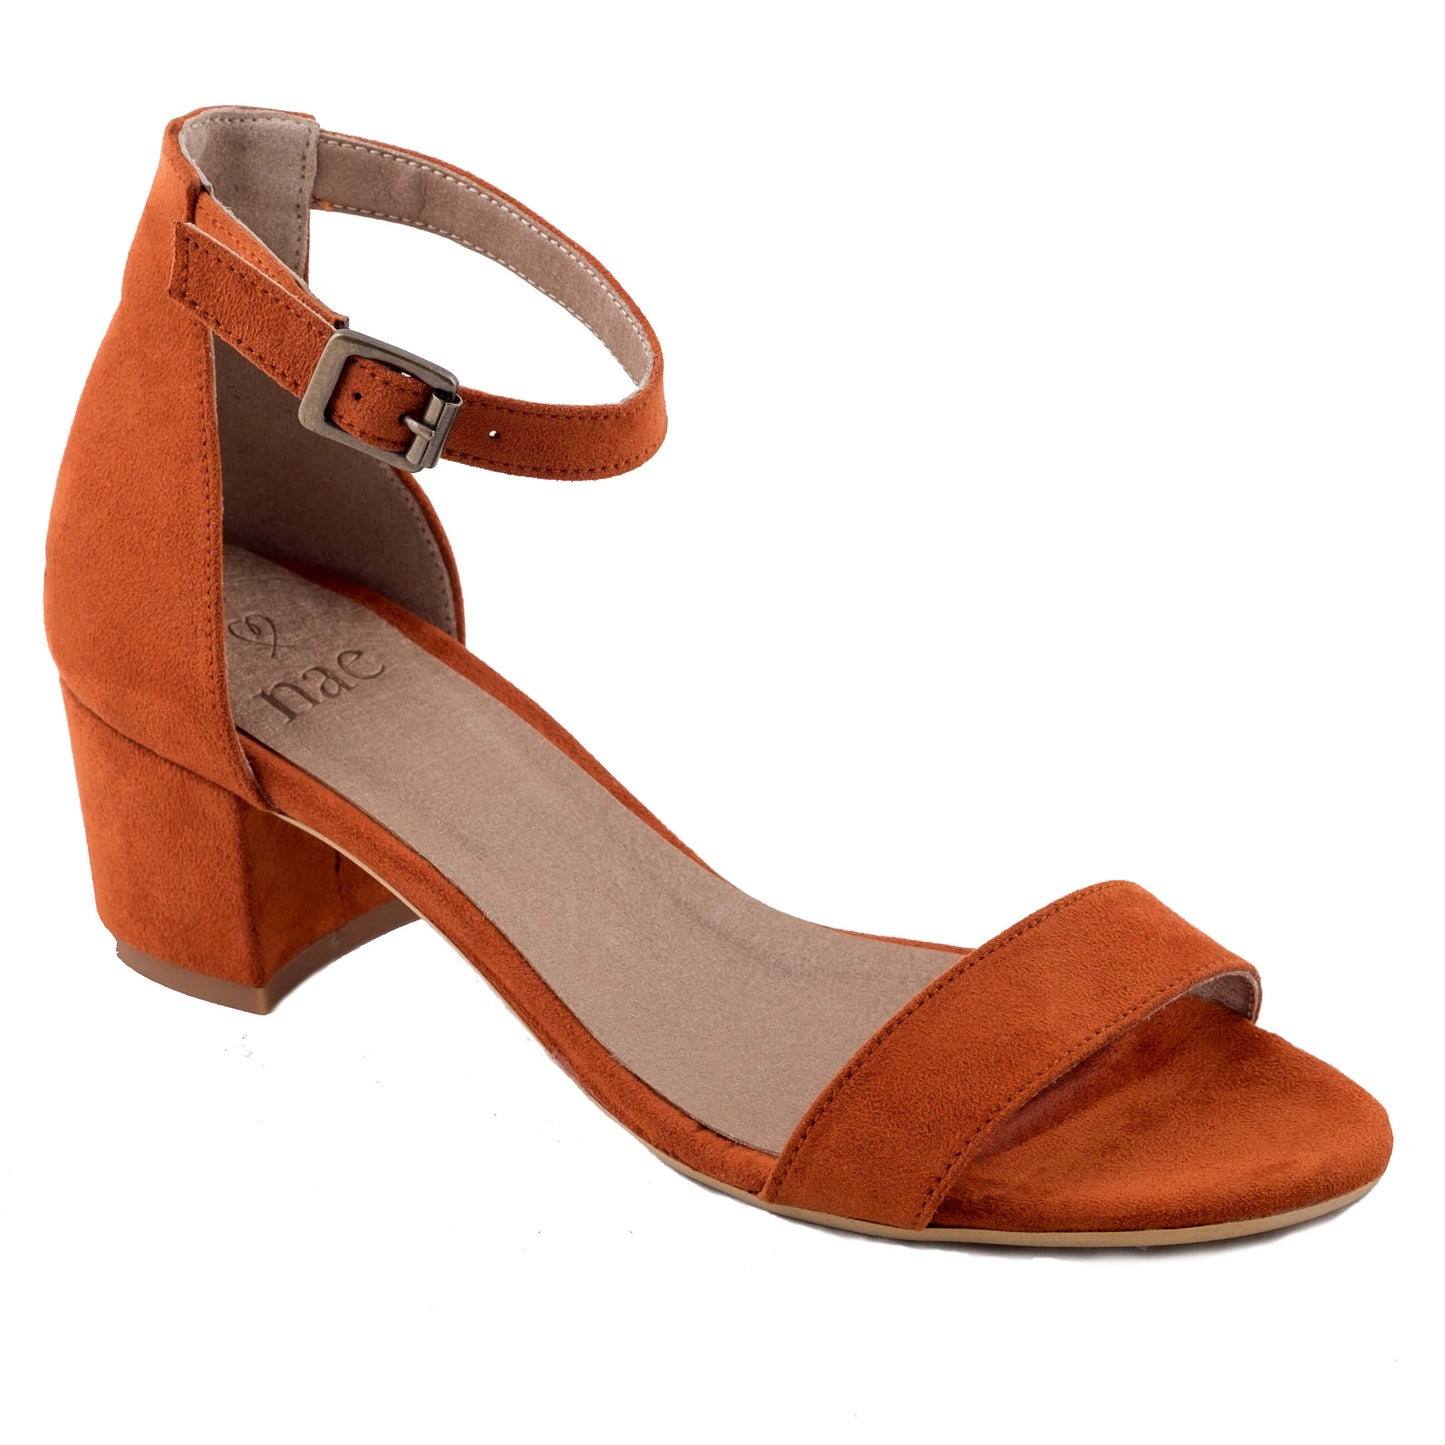 Irene Orange - Ankle strap sandal with a block heel